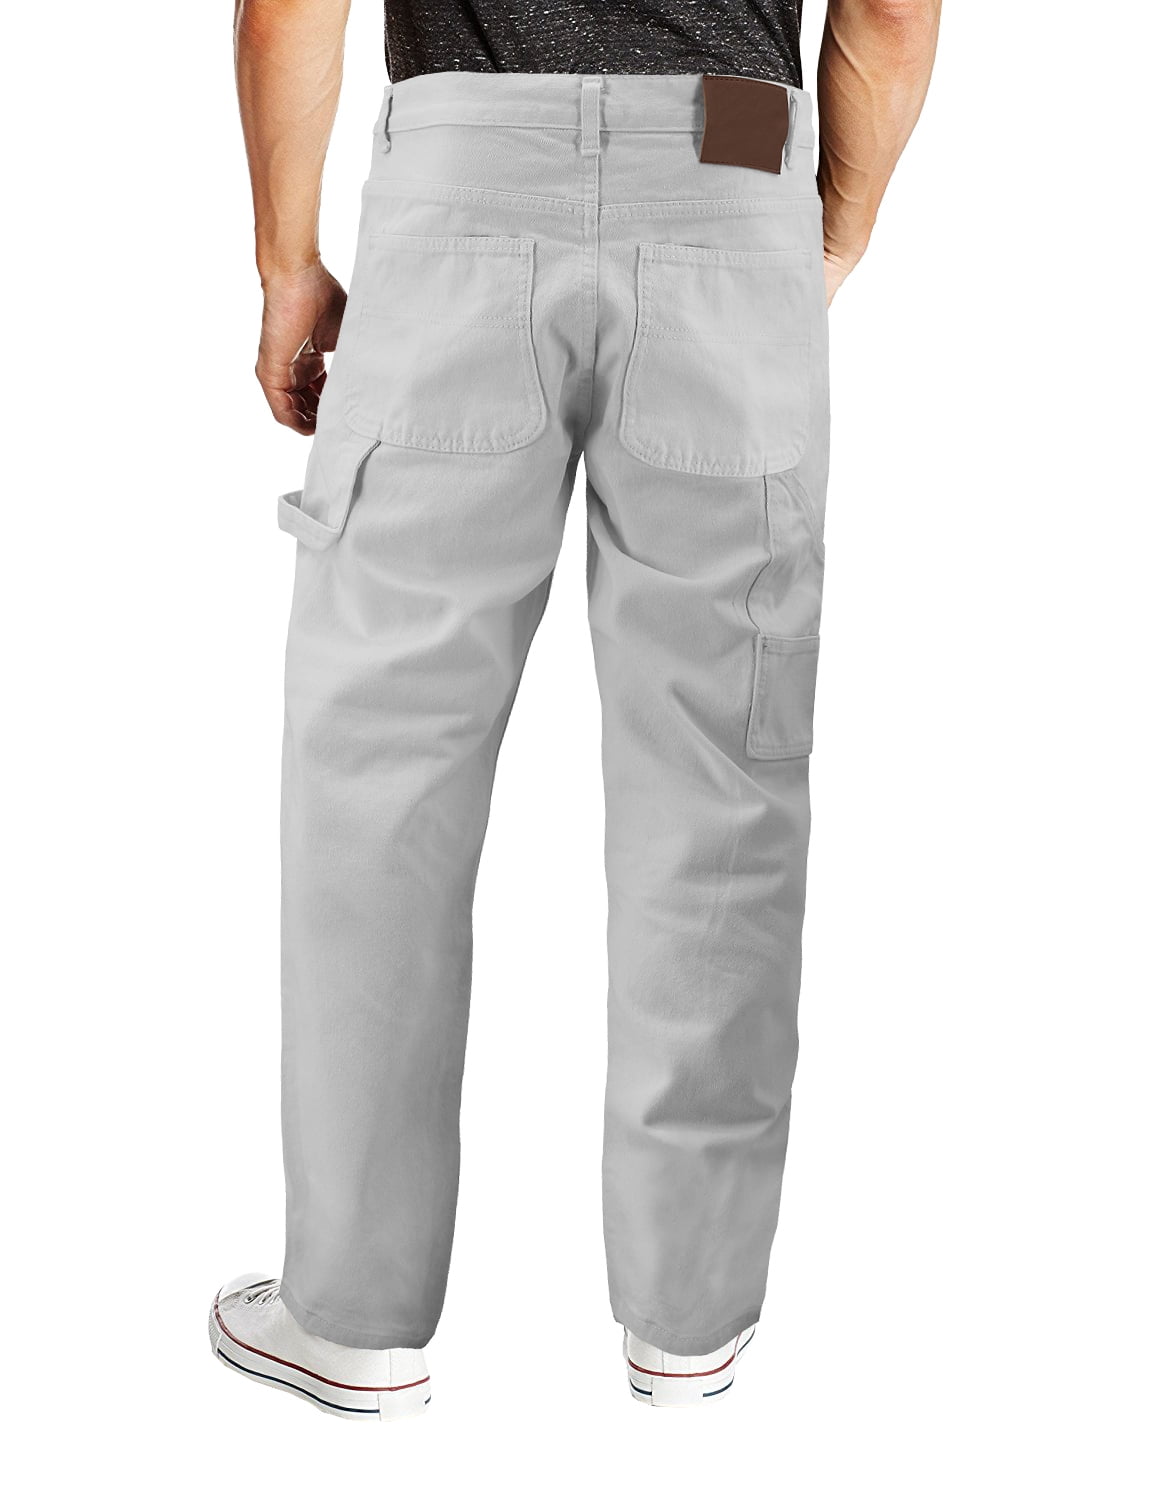 260$ PT05 Trousers Pants Jeans Denim Dark Beige Cotton Slim Fit 31 US / 47  EU - Luxgentleman